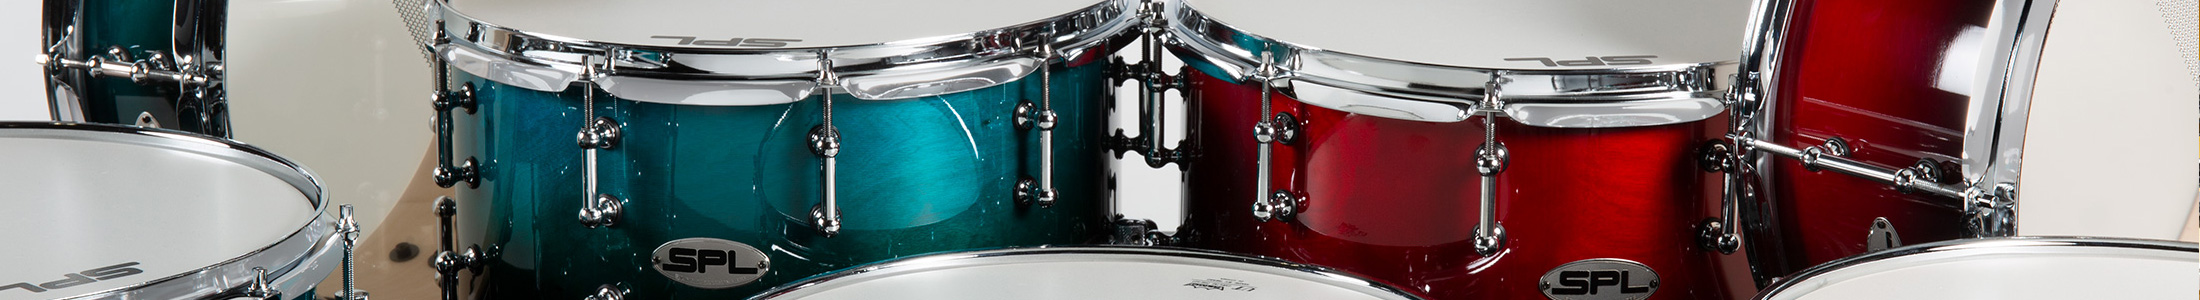 SPL 468 Series Snare Drums